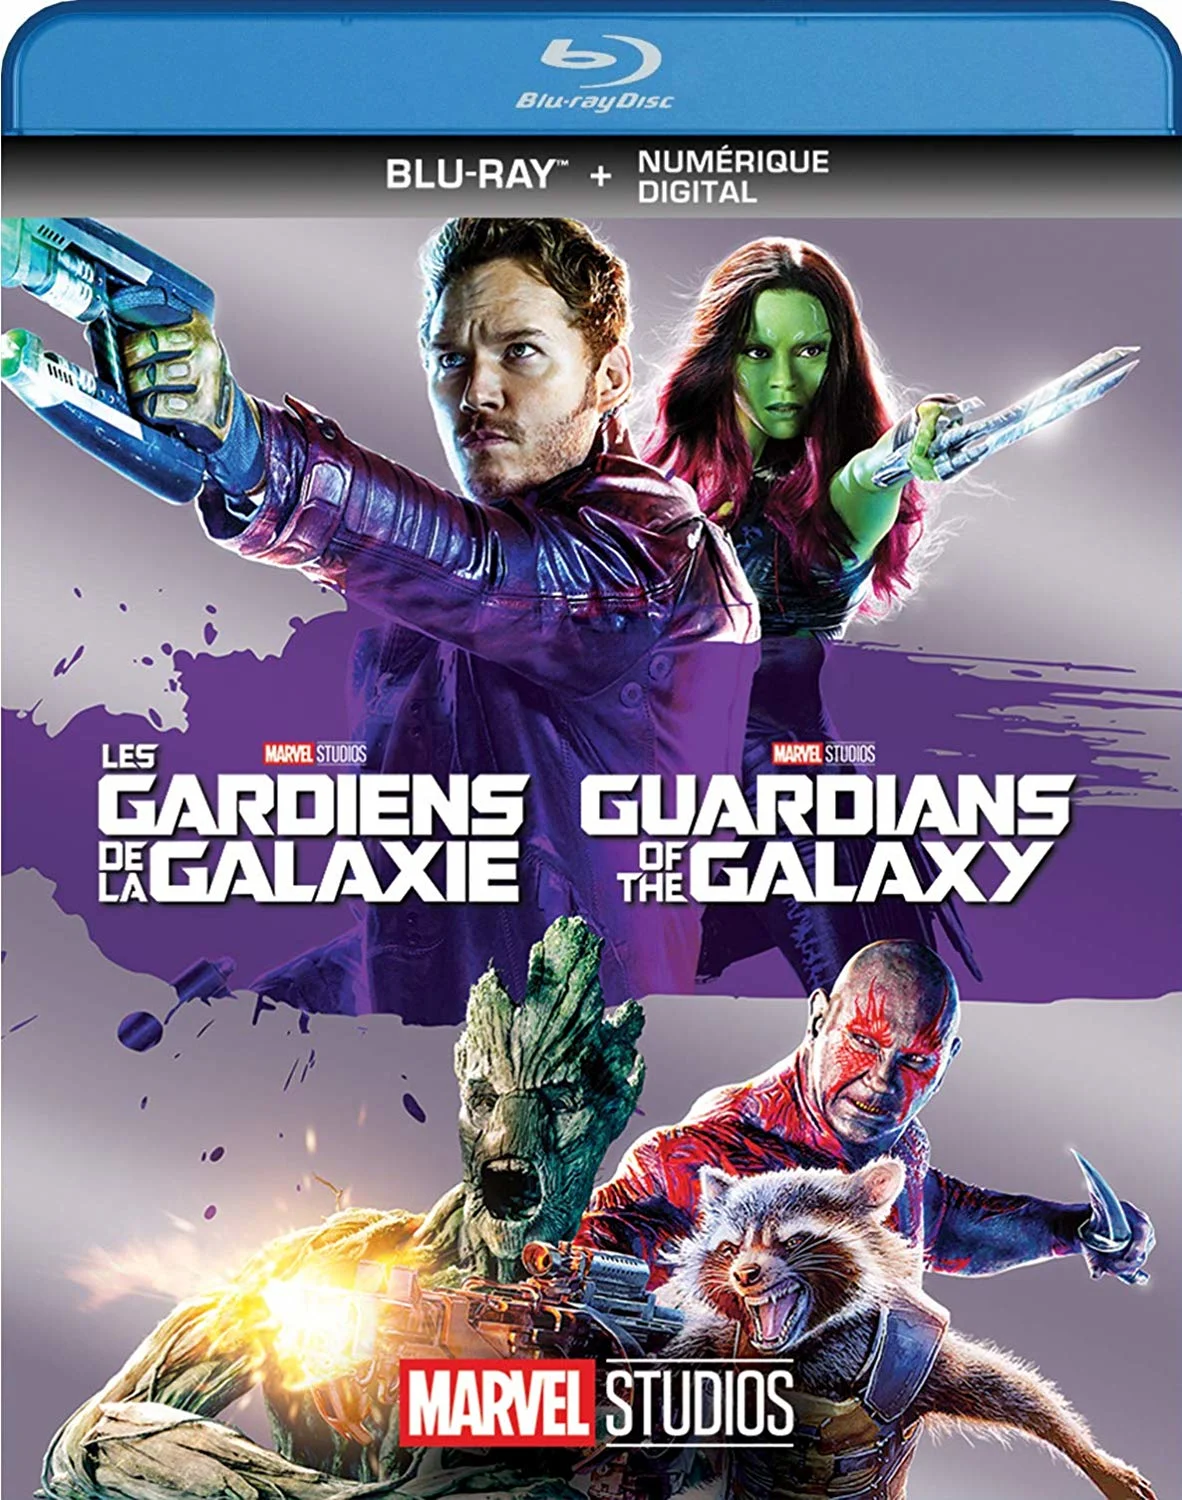 Guardians of the Galaxy (Blu-ray) on MovieShack